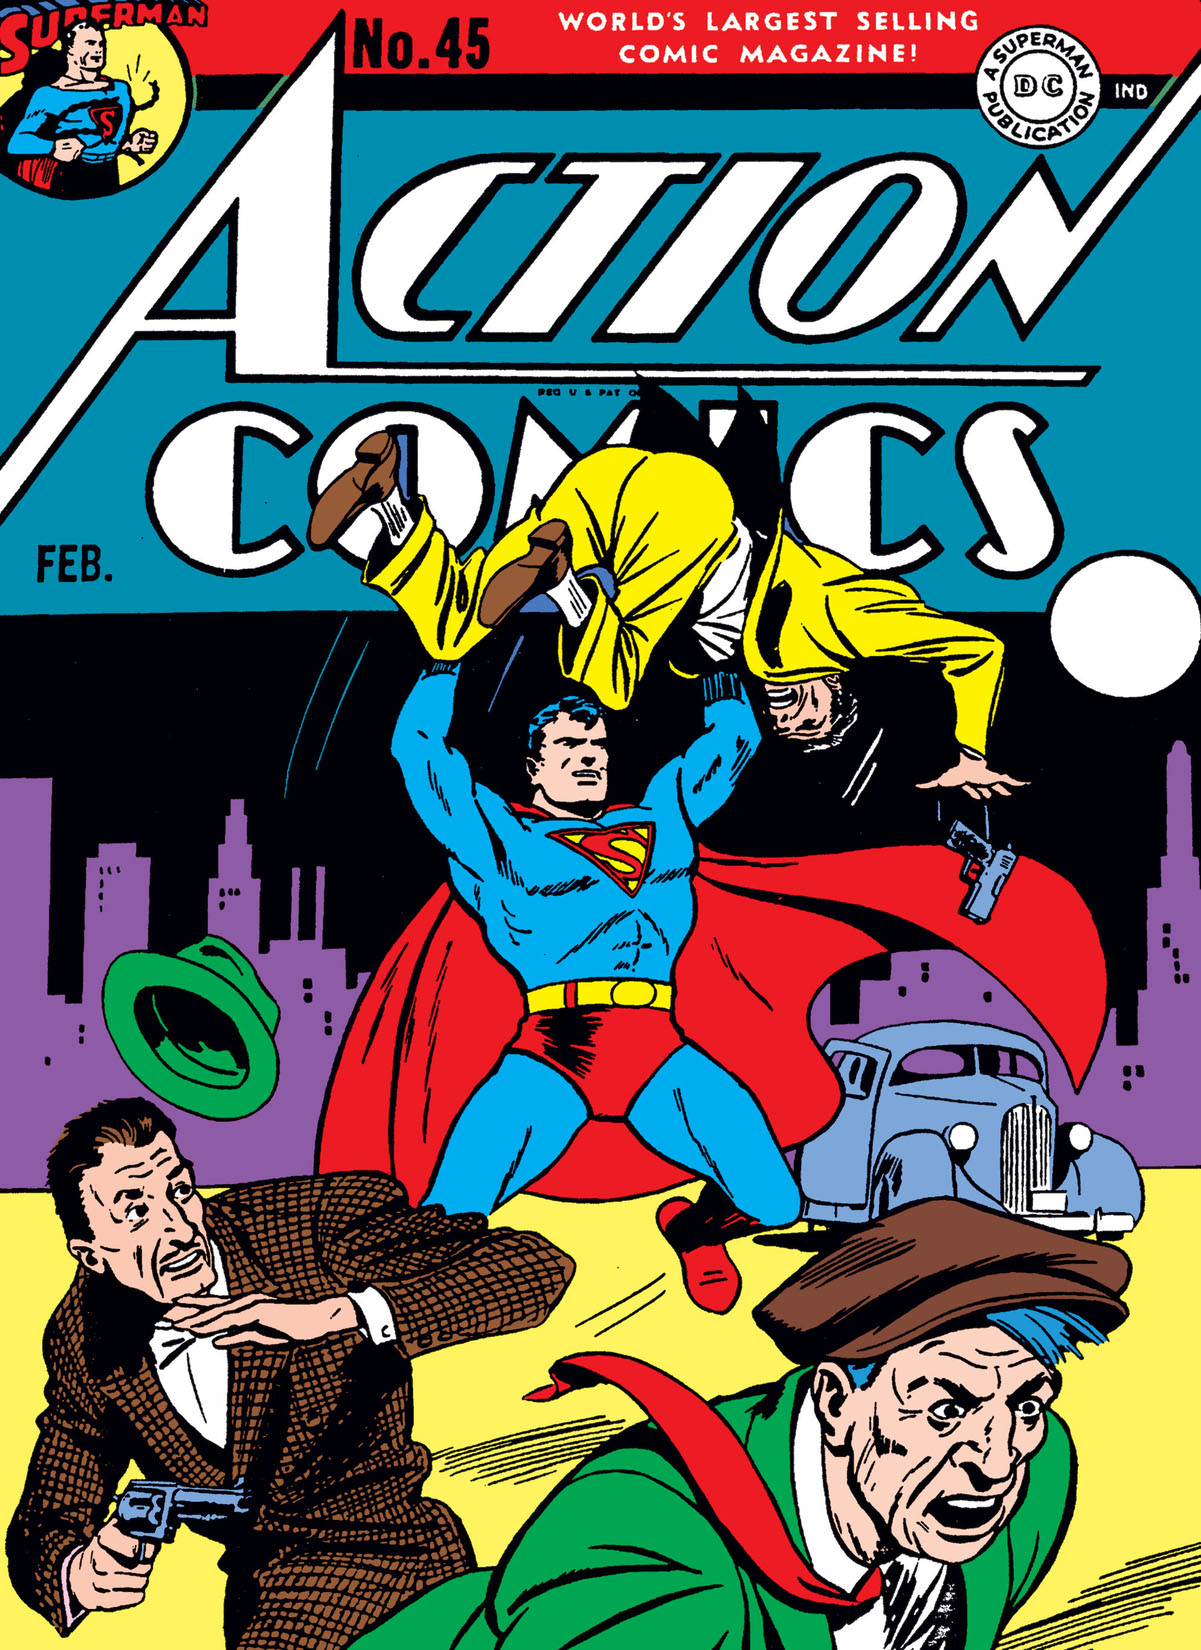 Action Comics (1938-) #45 preview images